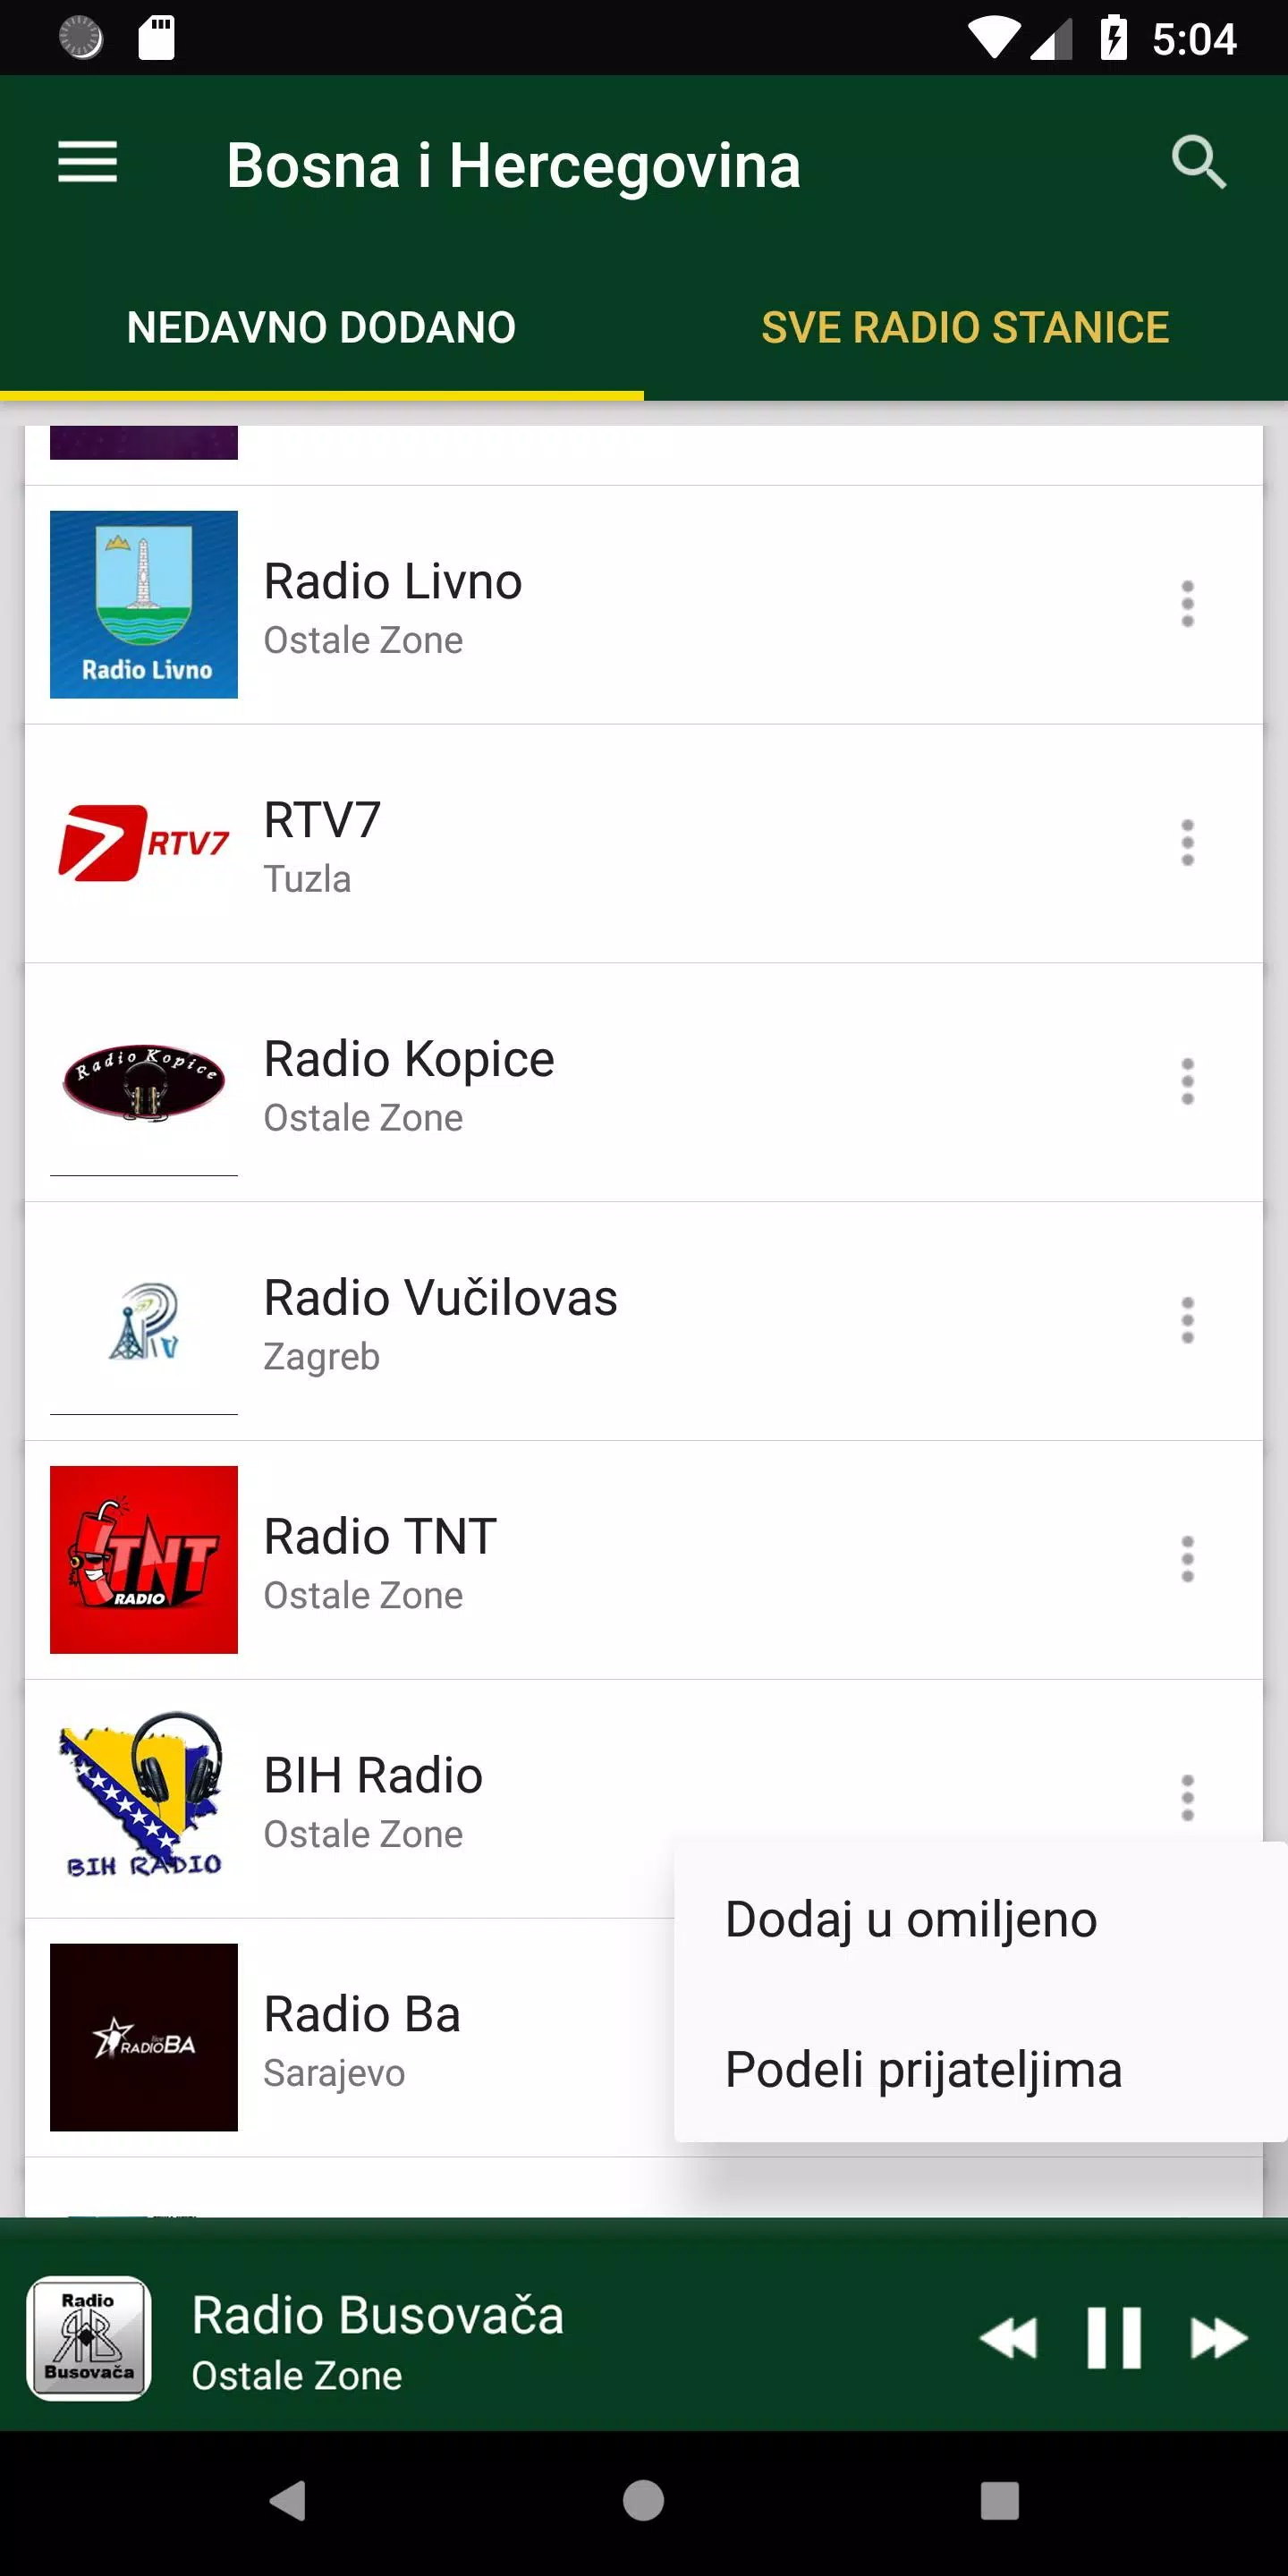 Bosna i Hercegovina Radio Stanice for Android - APK Download